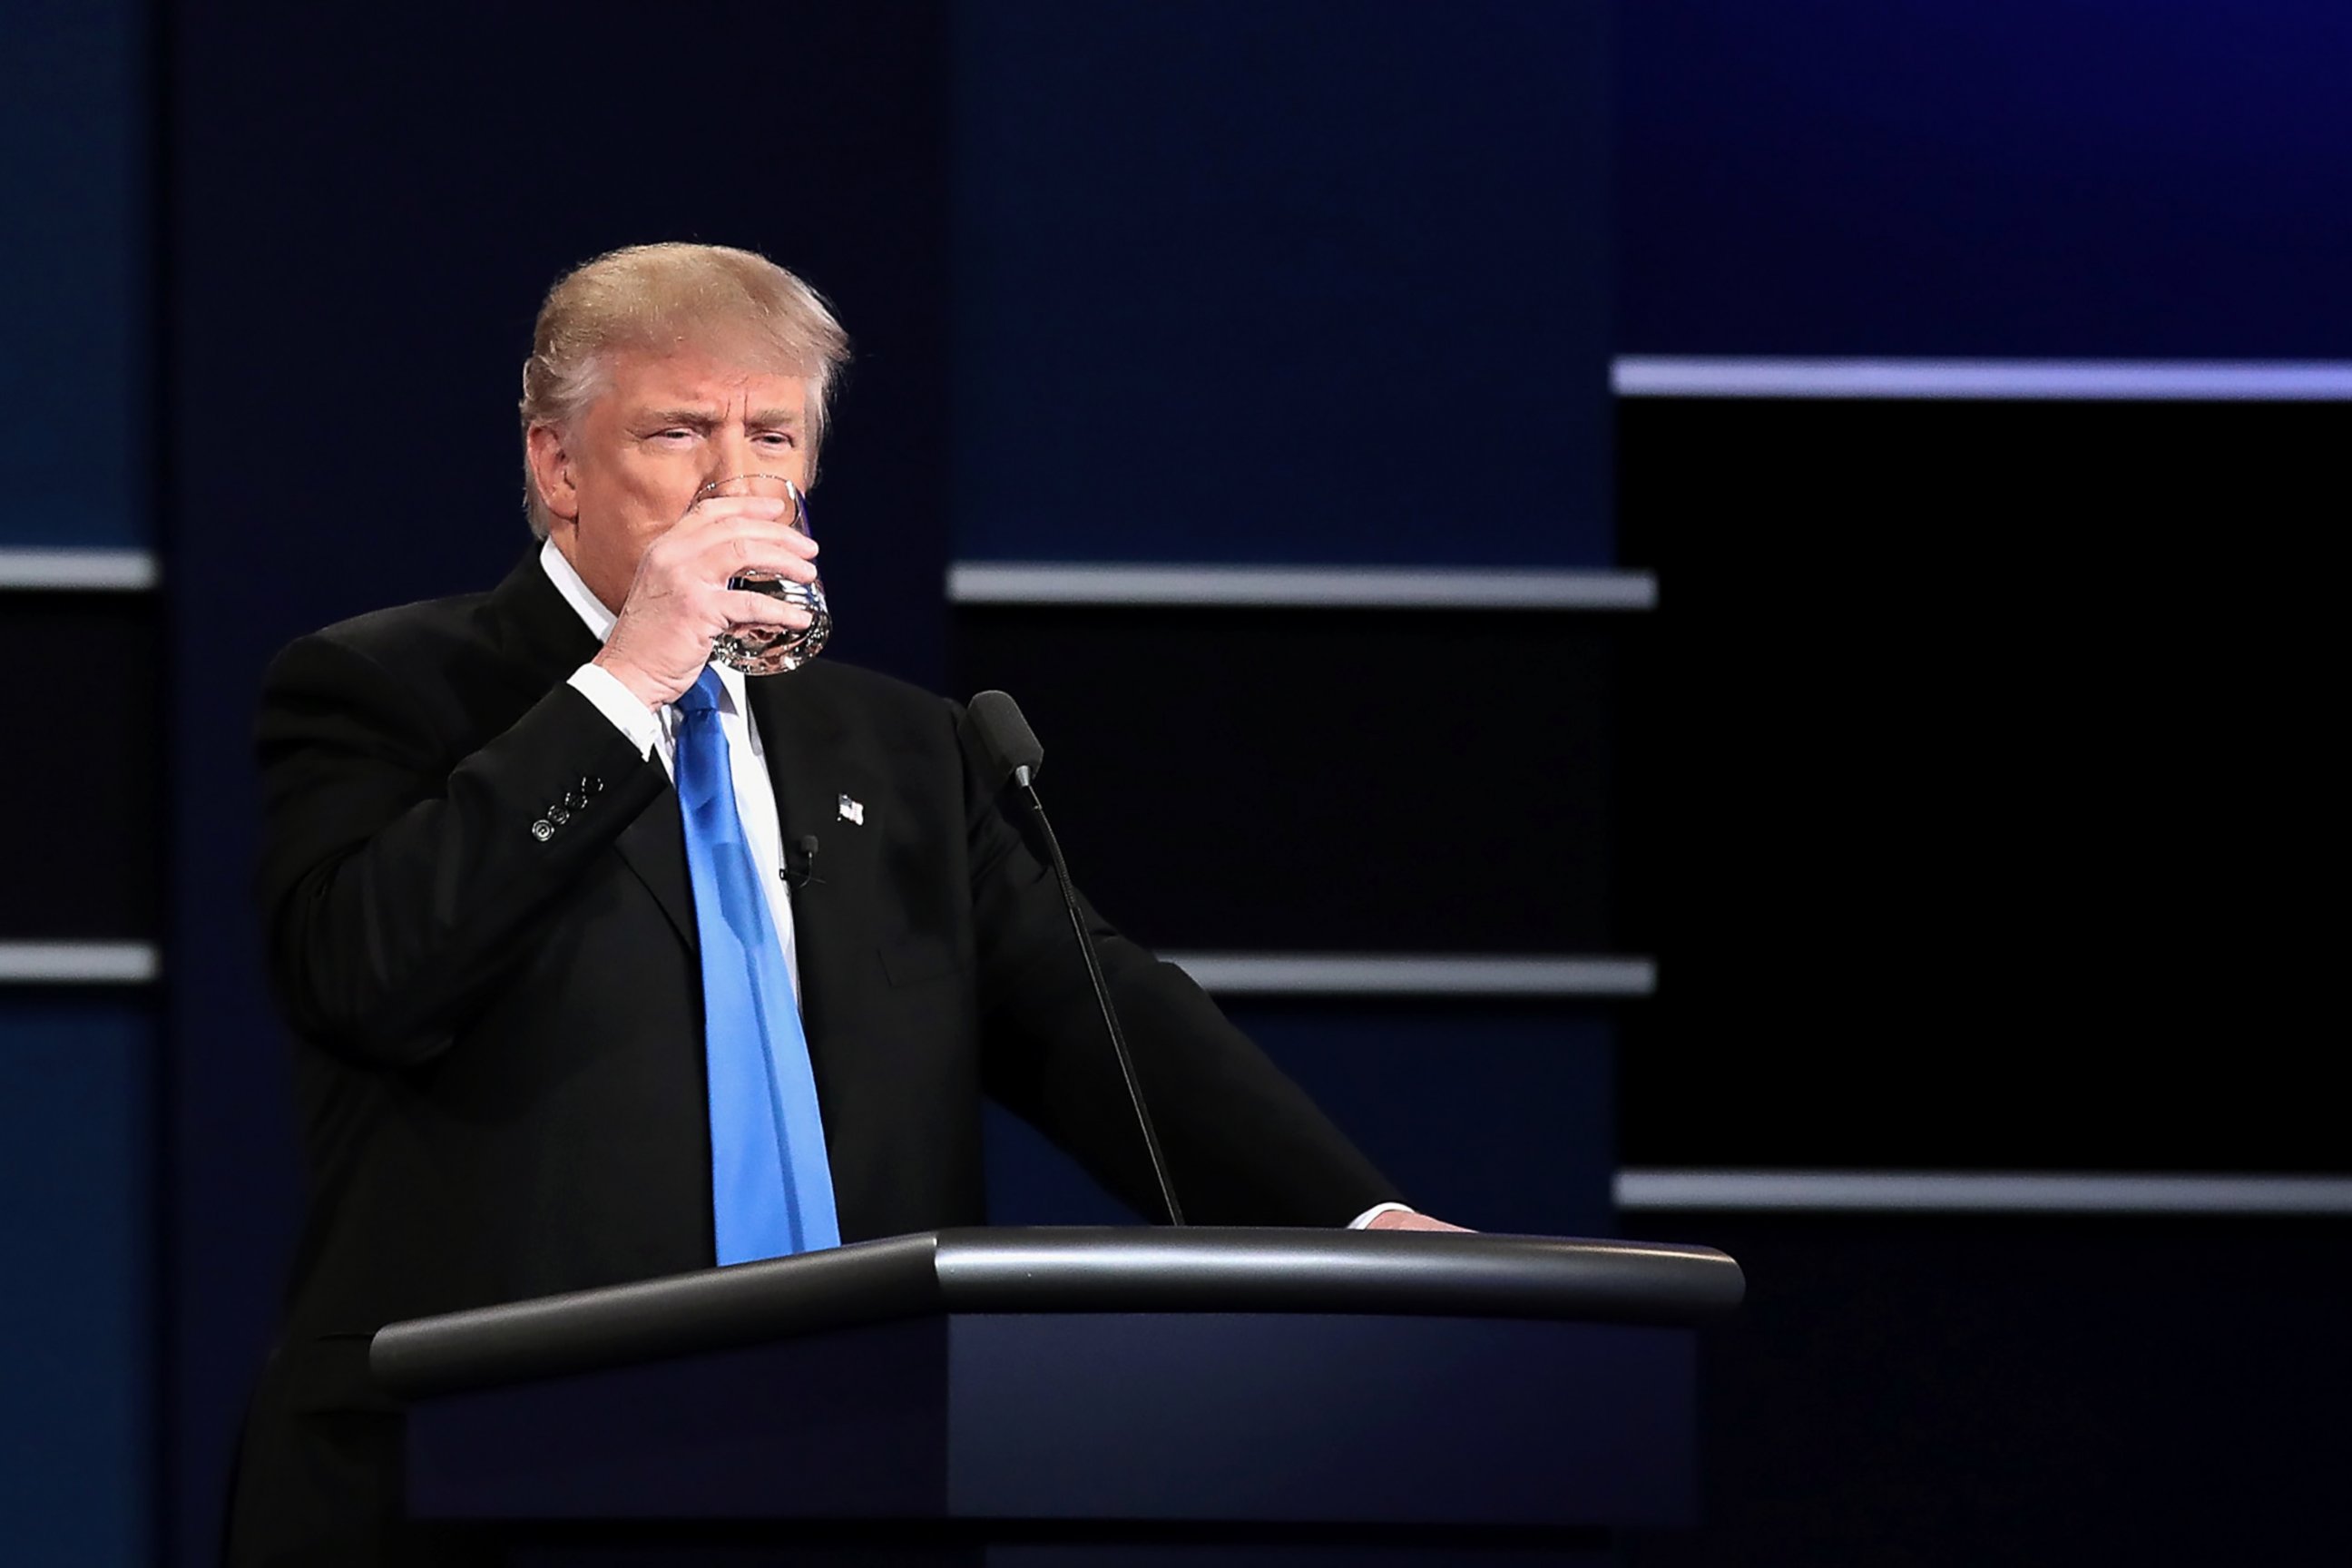 PHOTO: Republican presidential nominee Donald Trump drinks water during the Presidential Debate at Hofstra University on Sept. 26, 2016 in Hempstead, New York.  